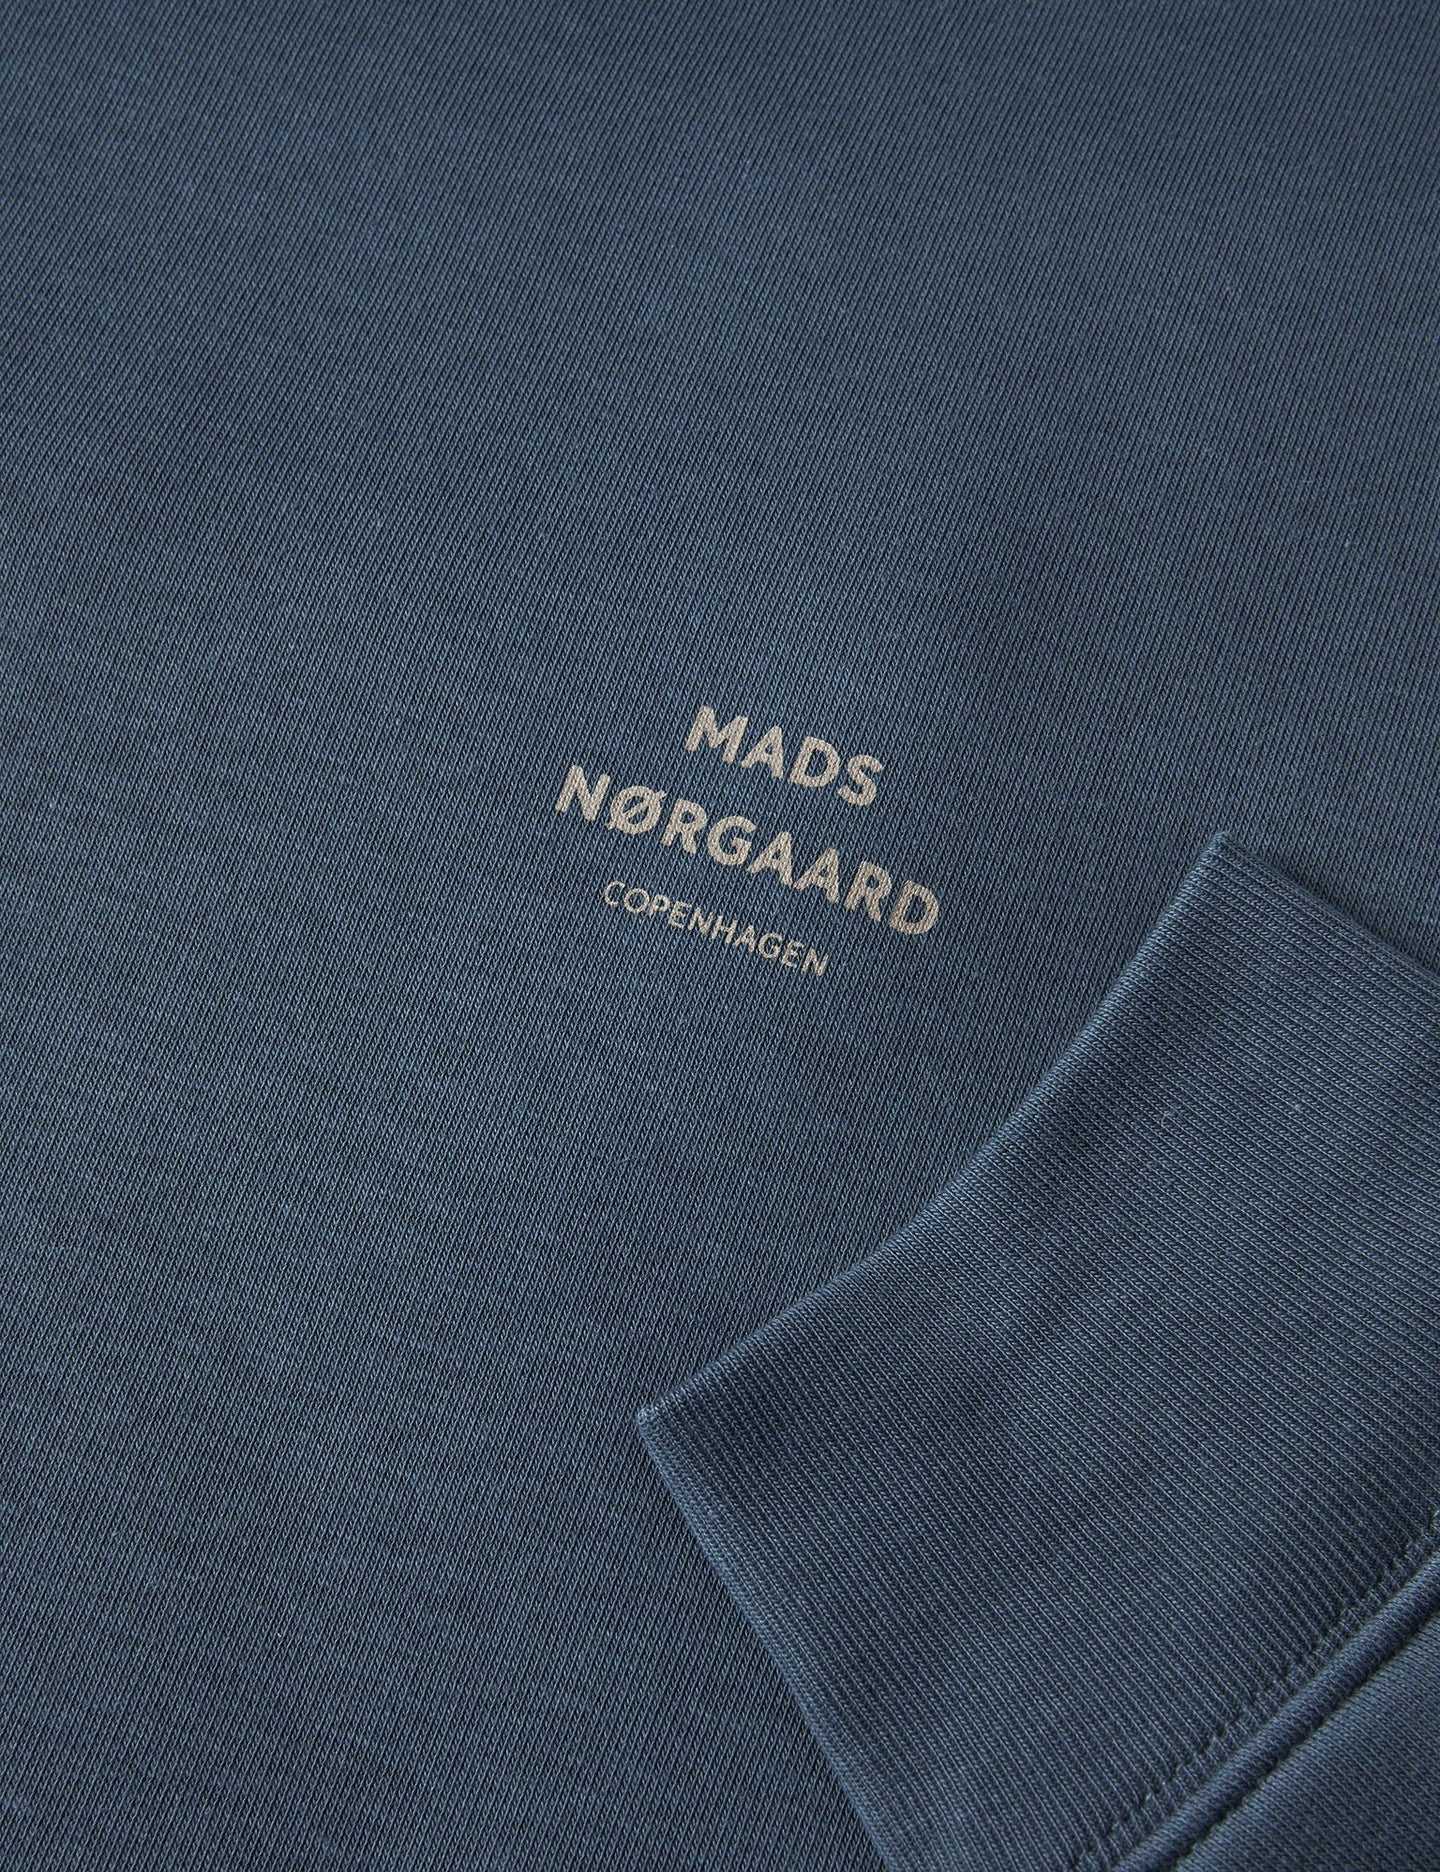 Mads Norgaard Crew Logo Sweat Donkerblauw Heren